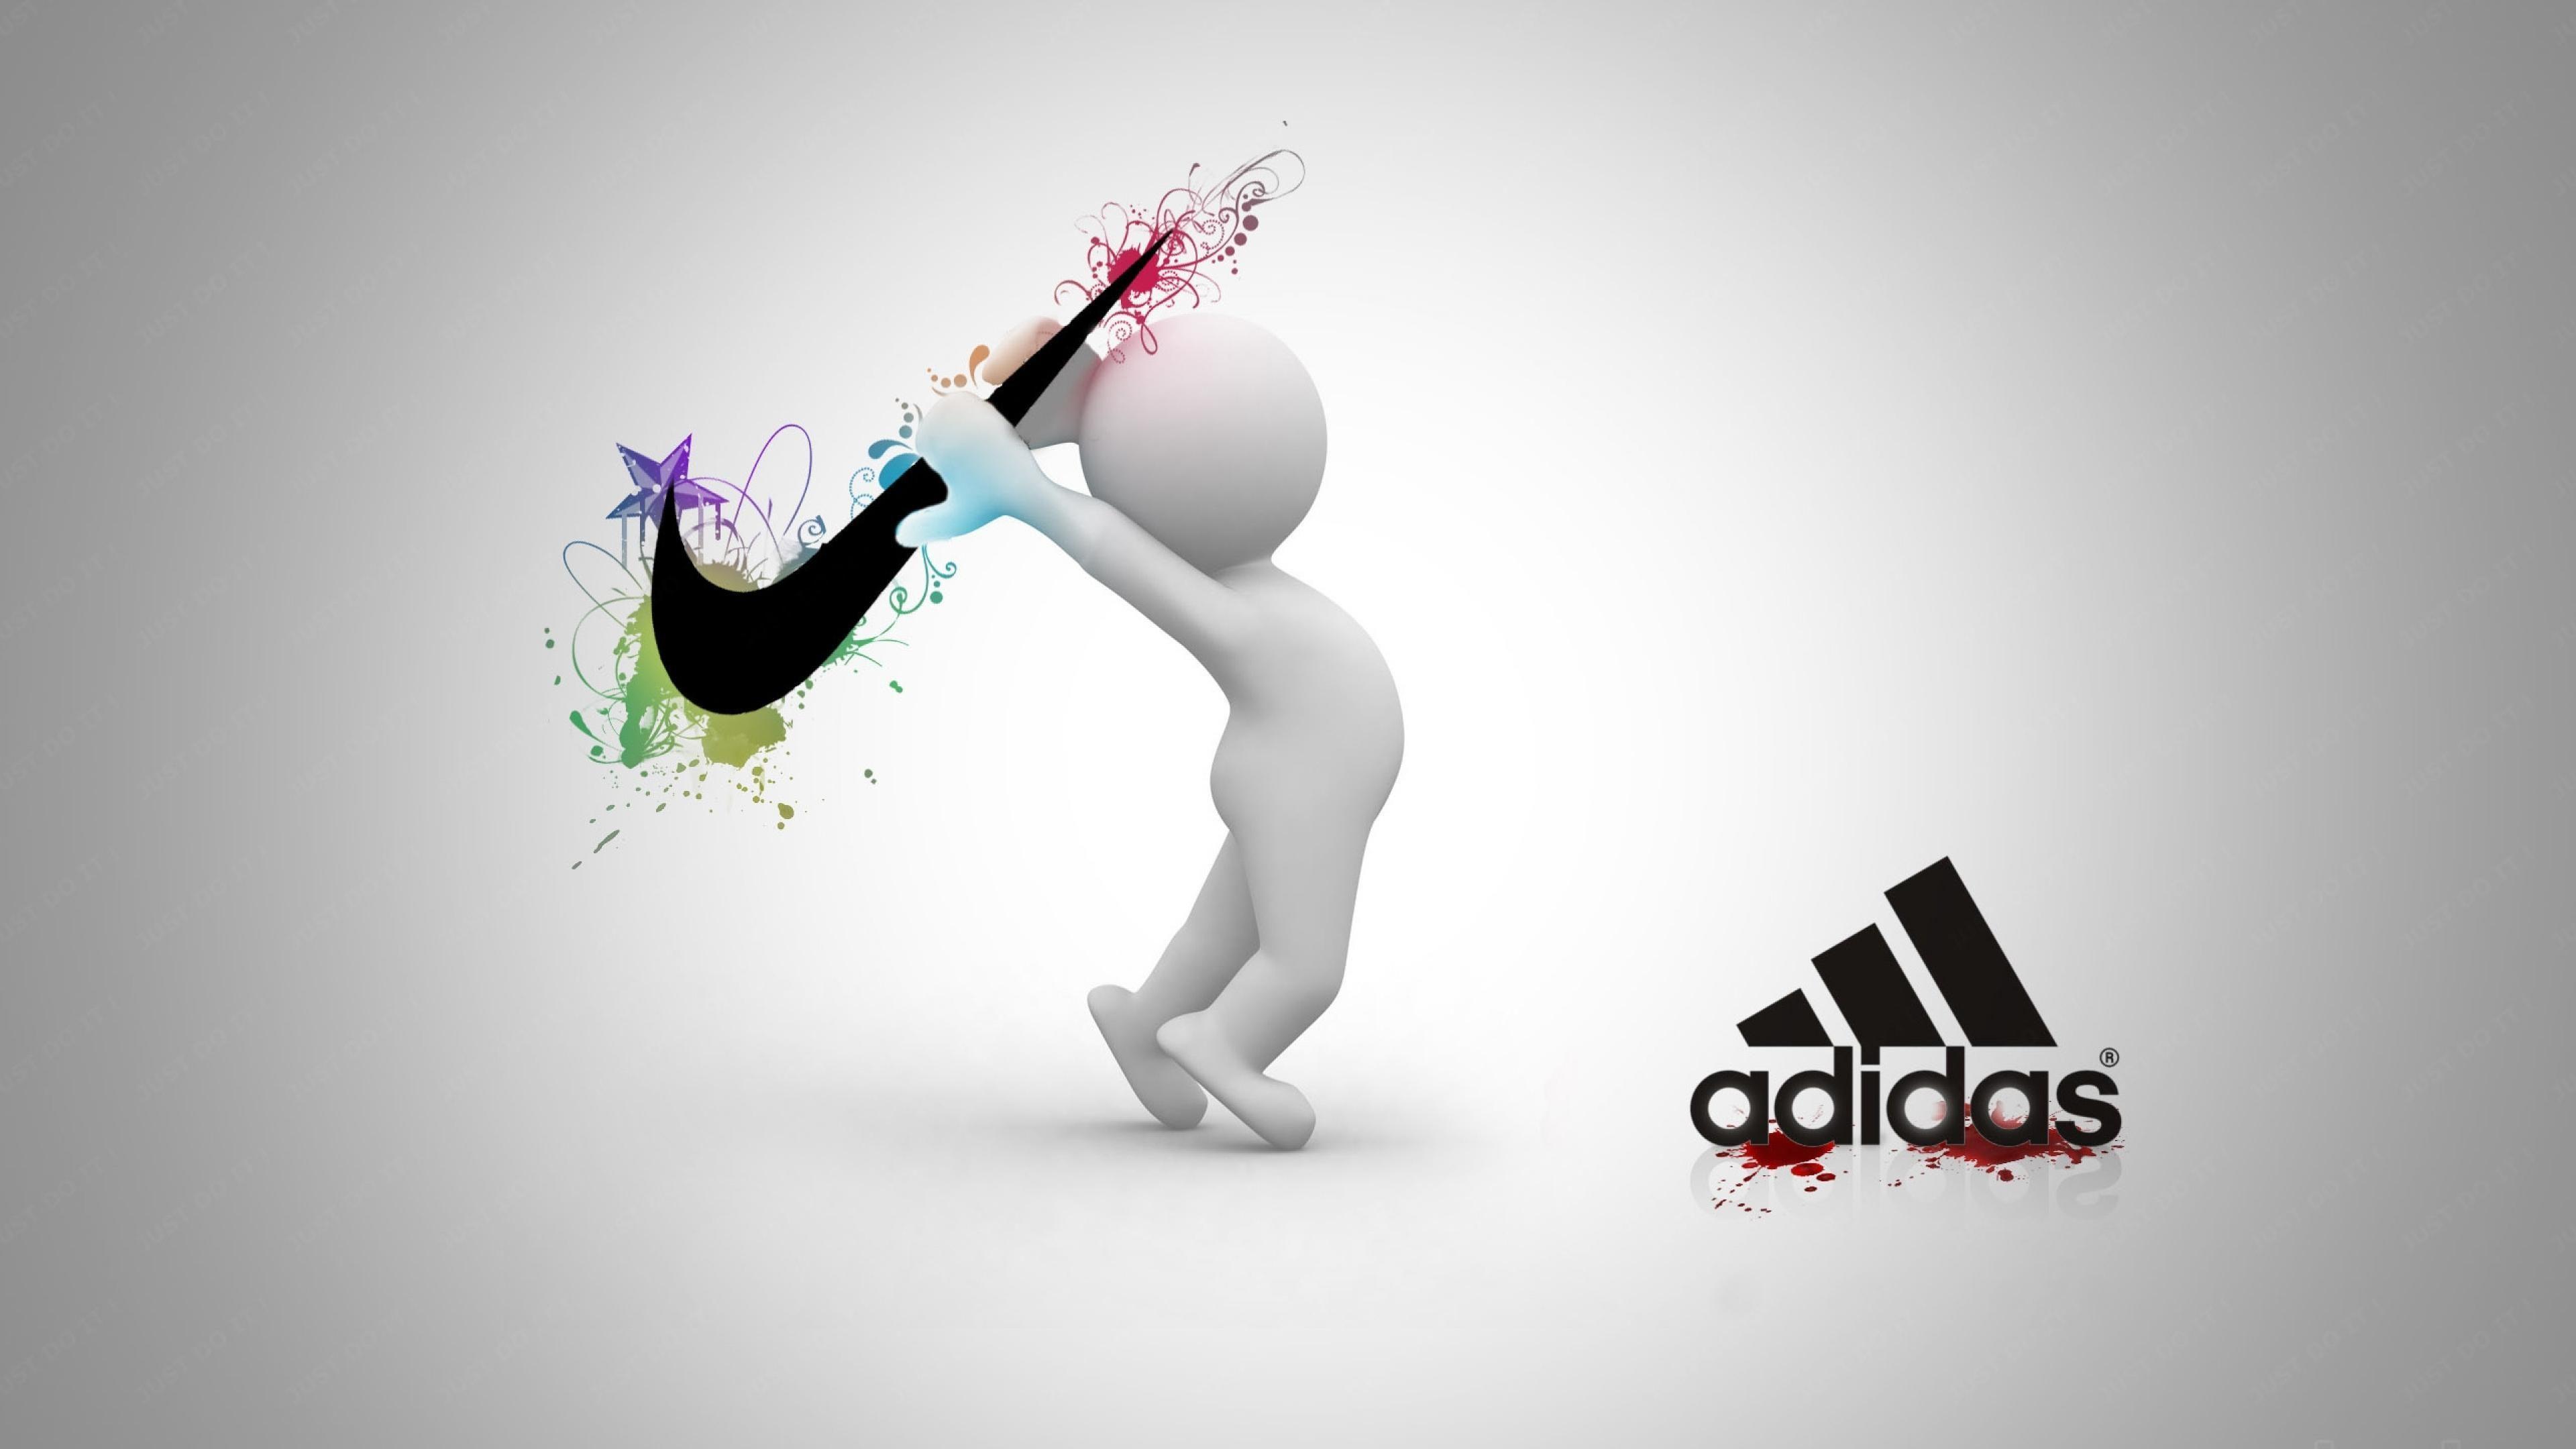 Adidas Wallpaper HD. Wallpaper, Background, Image, Art Photo